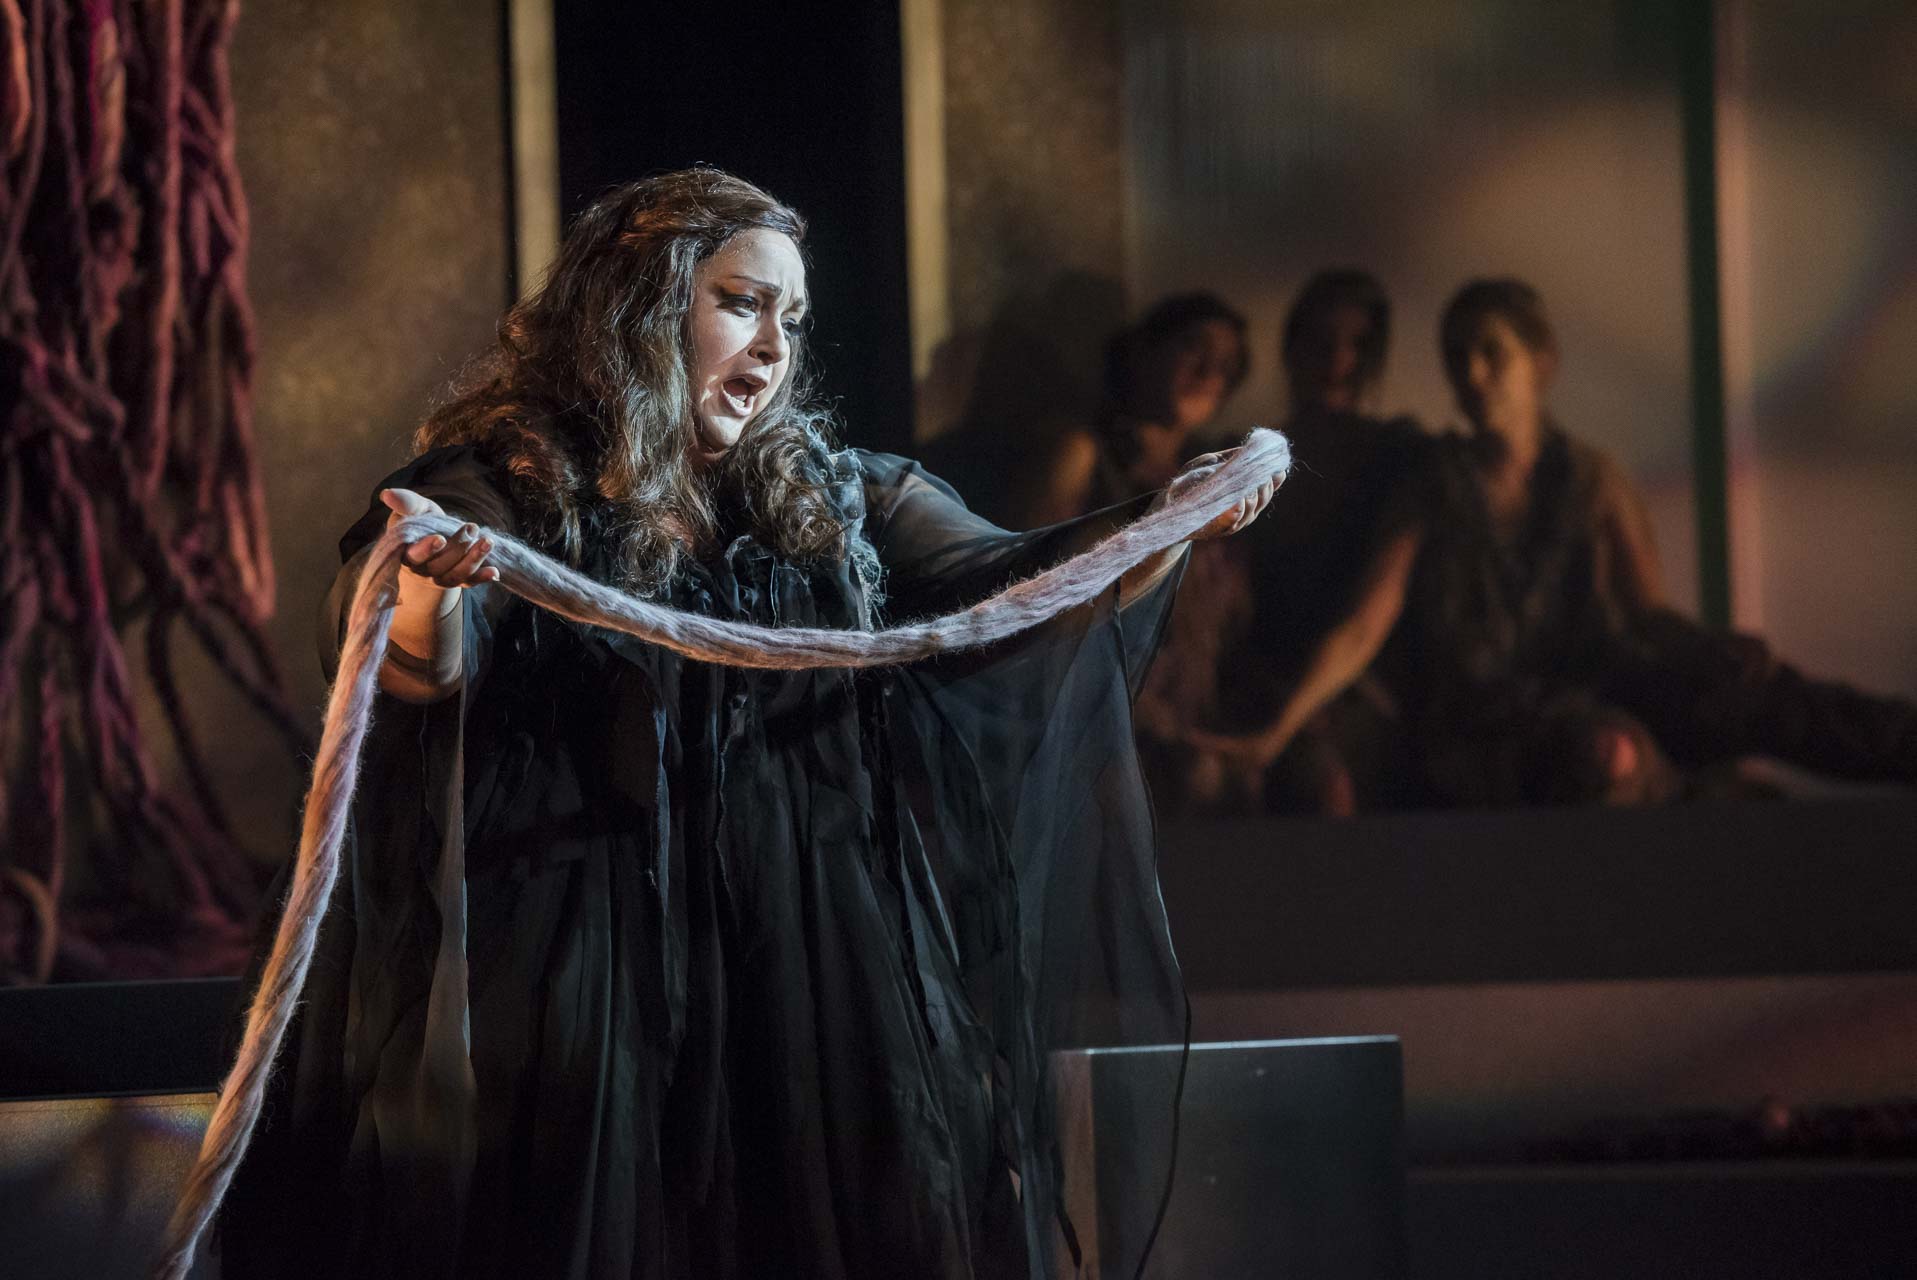 LFO's stunning performance of Ariadne Auf Naxos